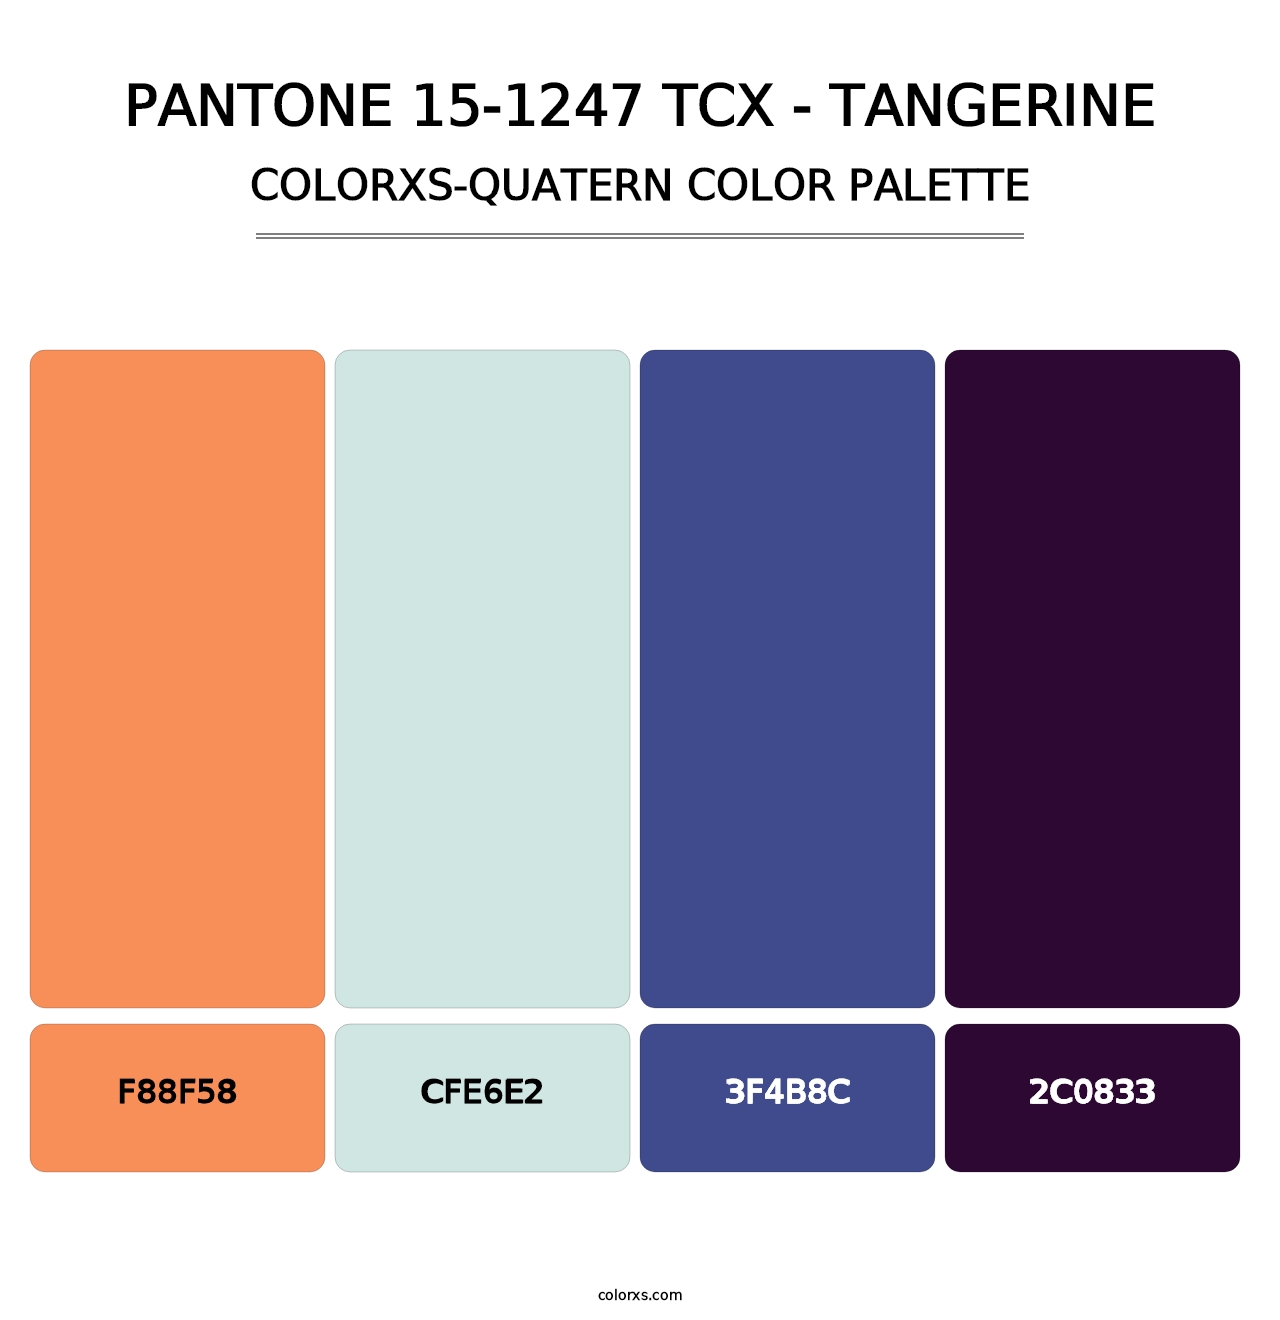 PANTONE 15-1247 TCX - Tangerine - Colorxs Quatern Palette